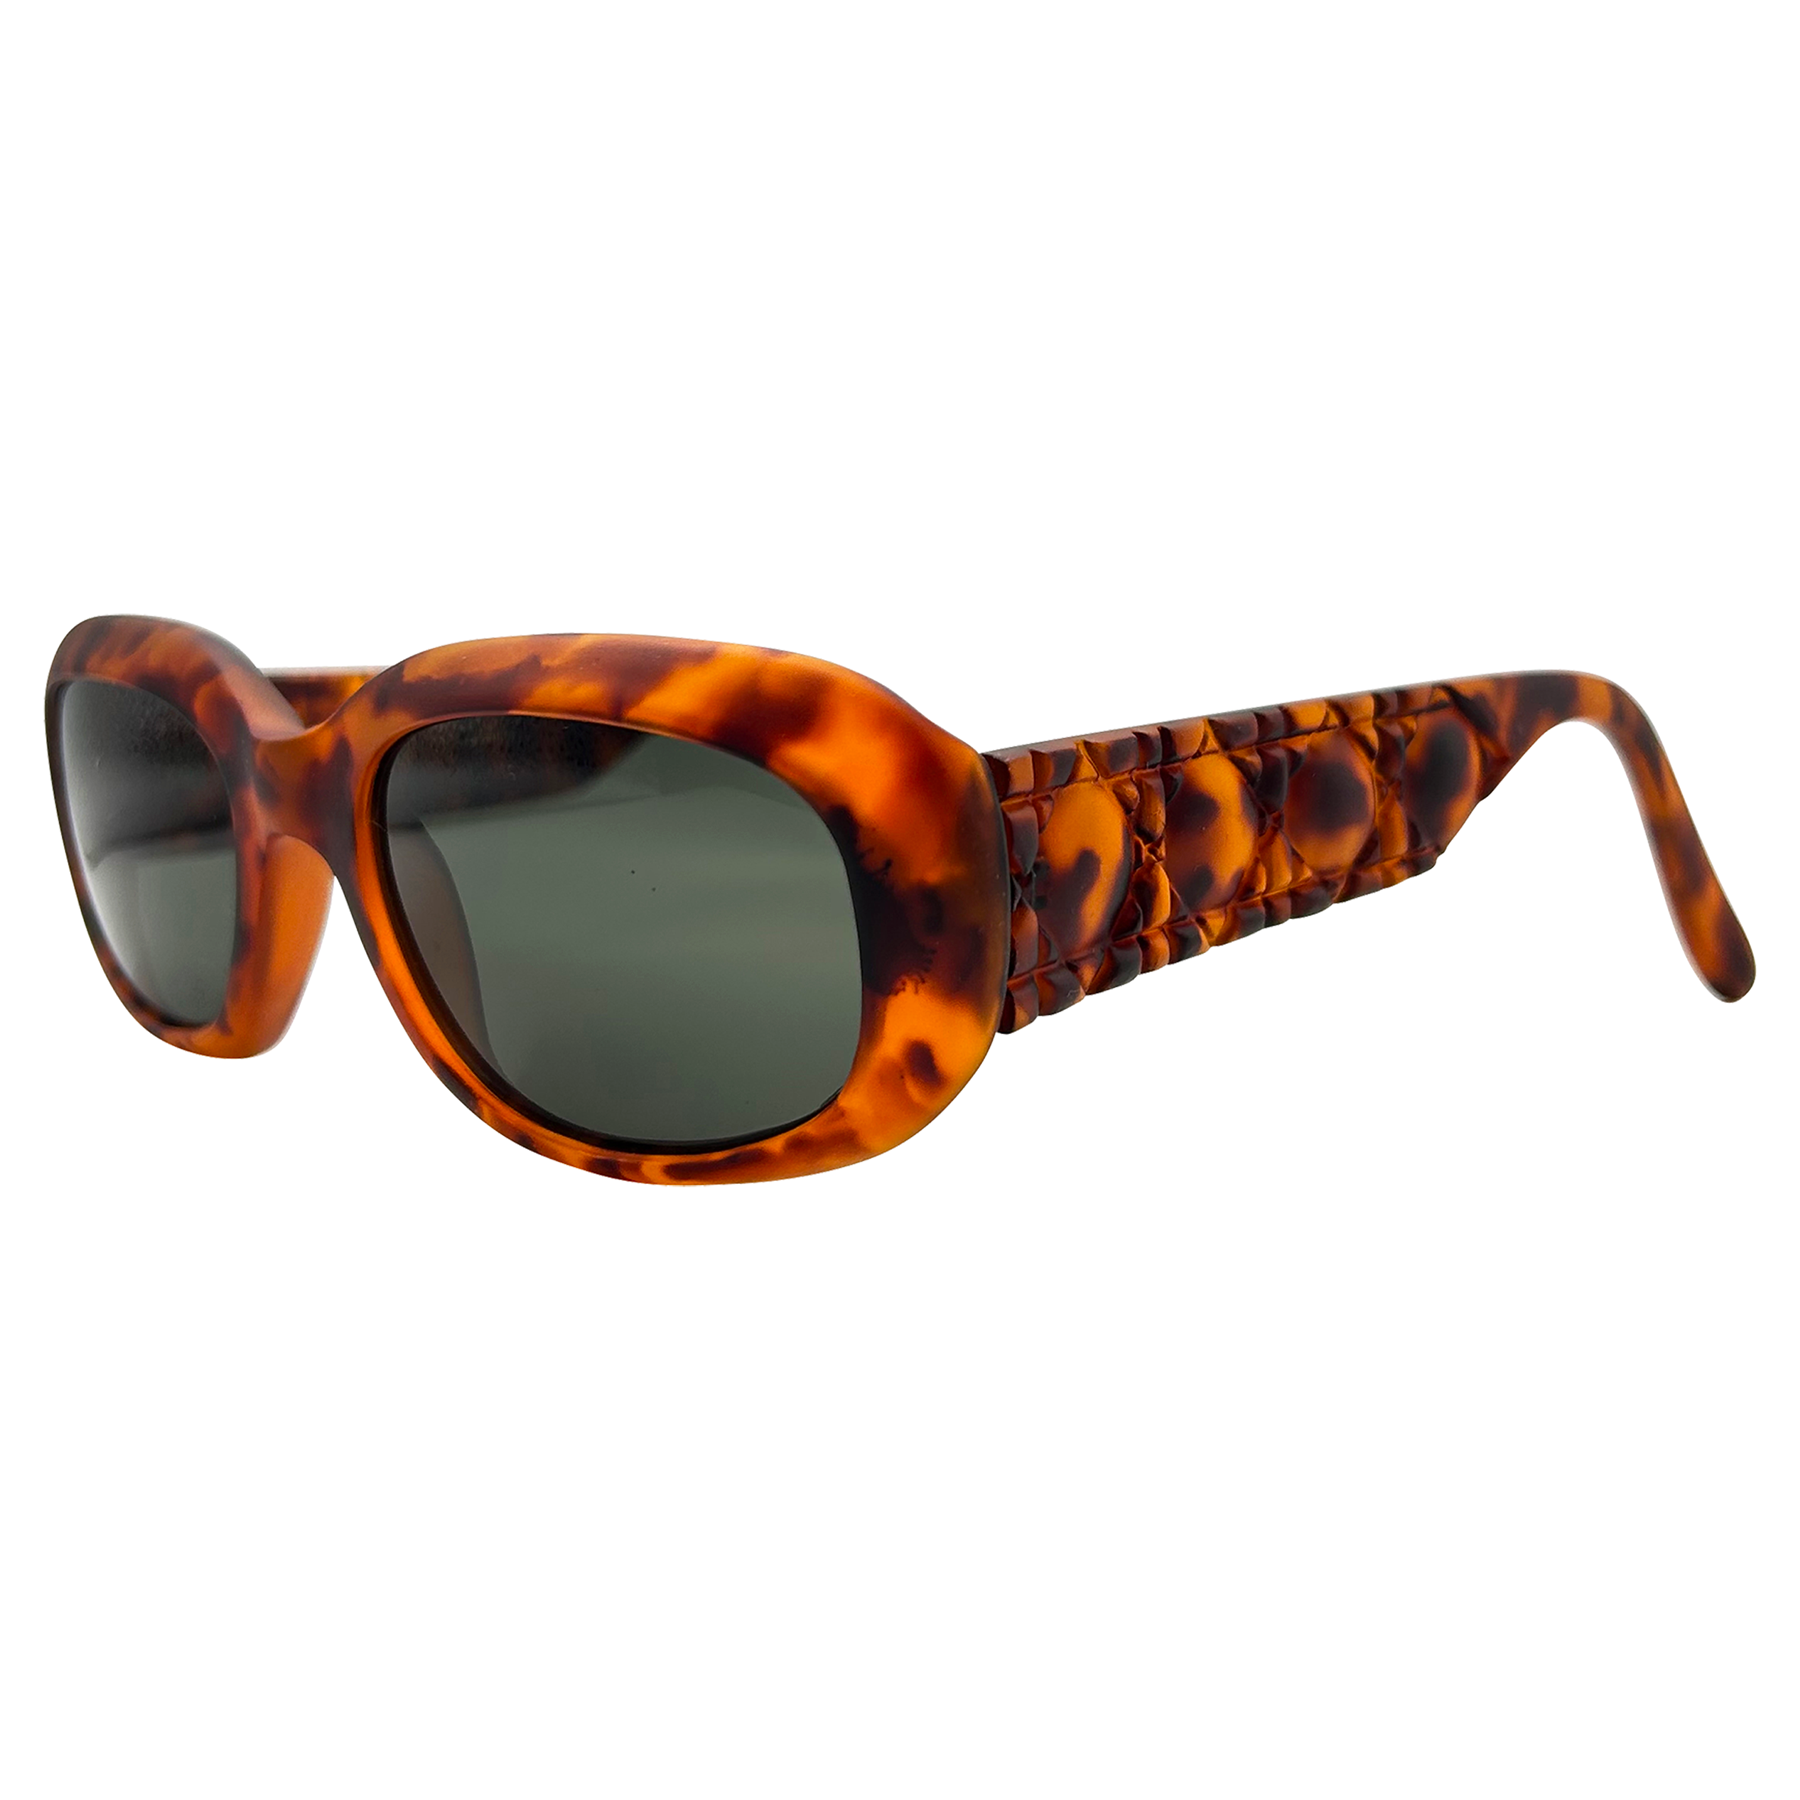 RAVE-UP Matte Tortoise/G15 Mod Square Sunglasses